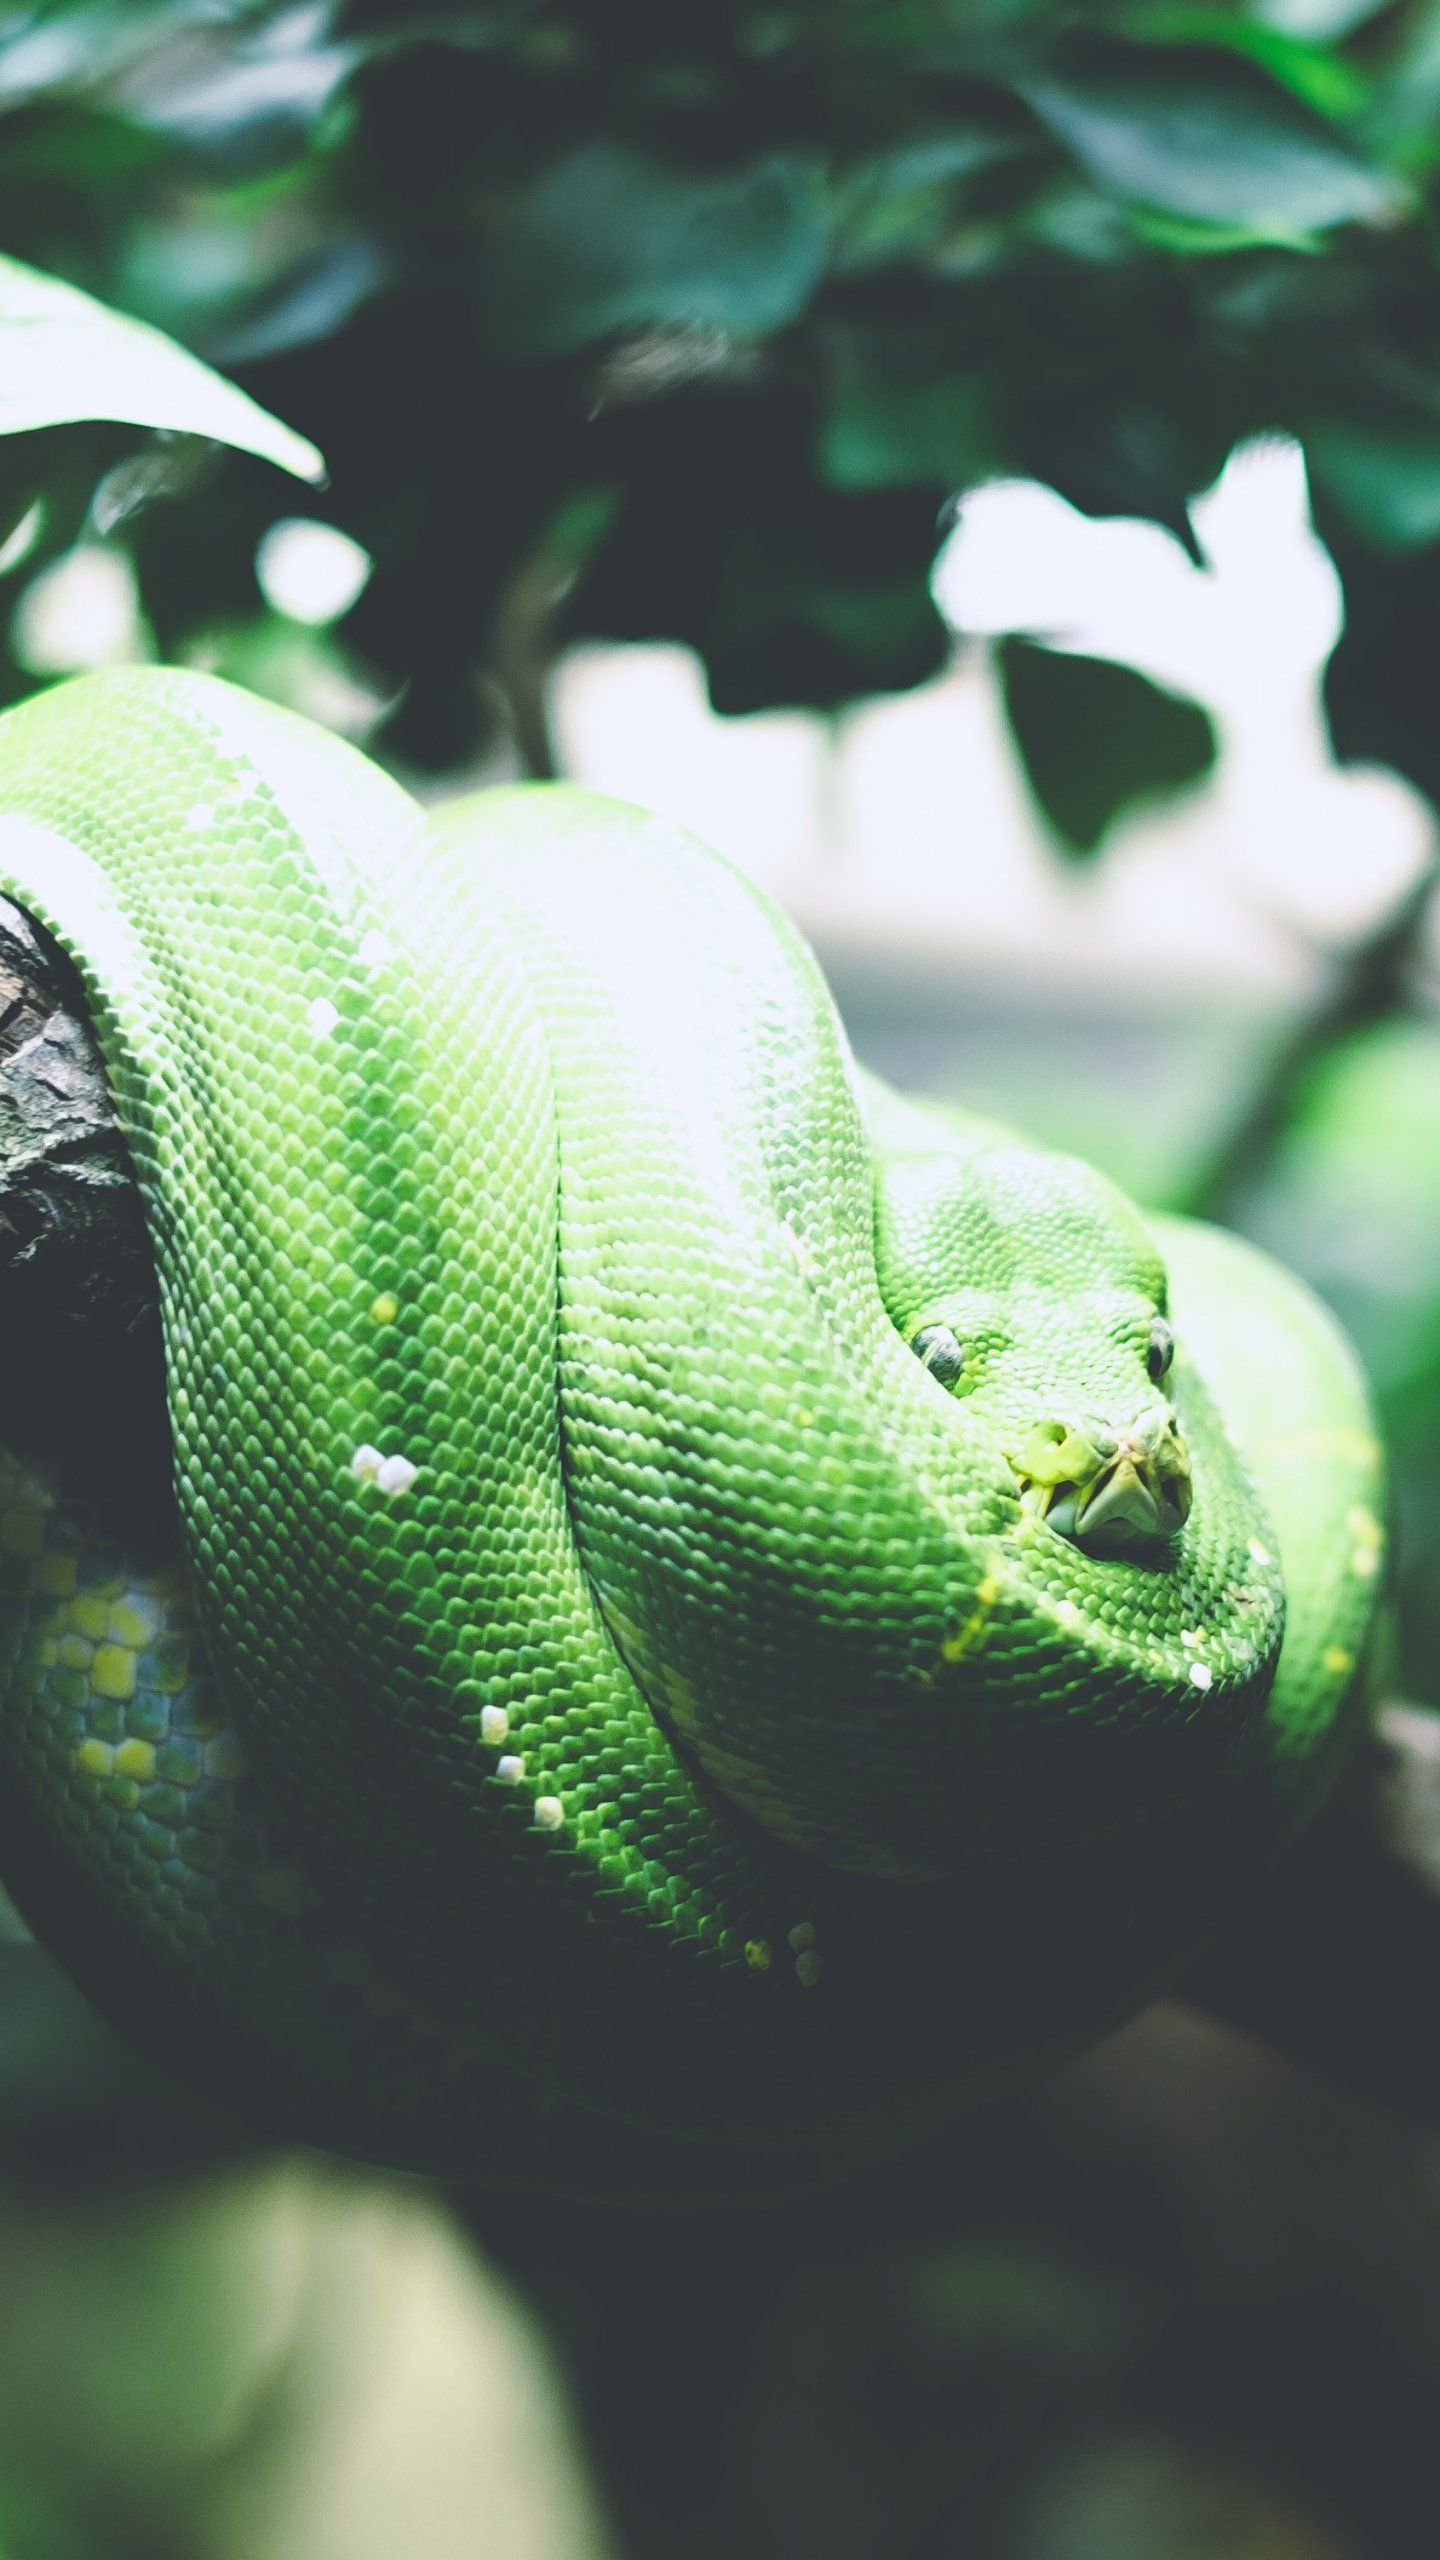 Tree Snake Wallpaper, Android & Desktop Background